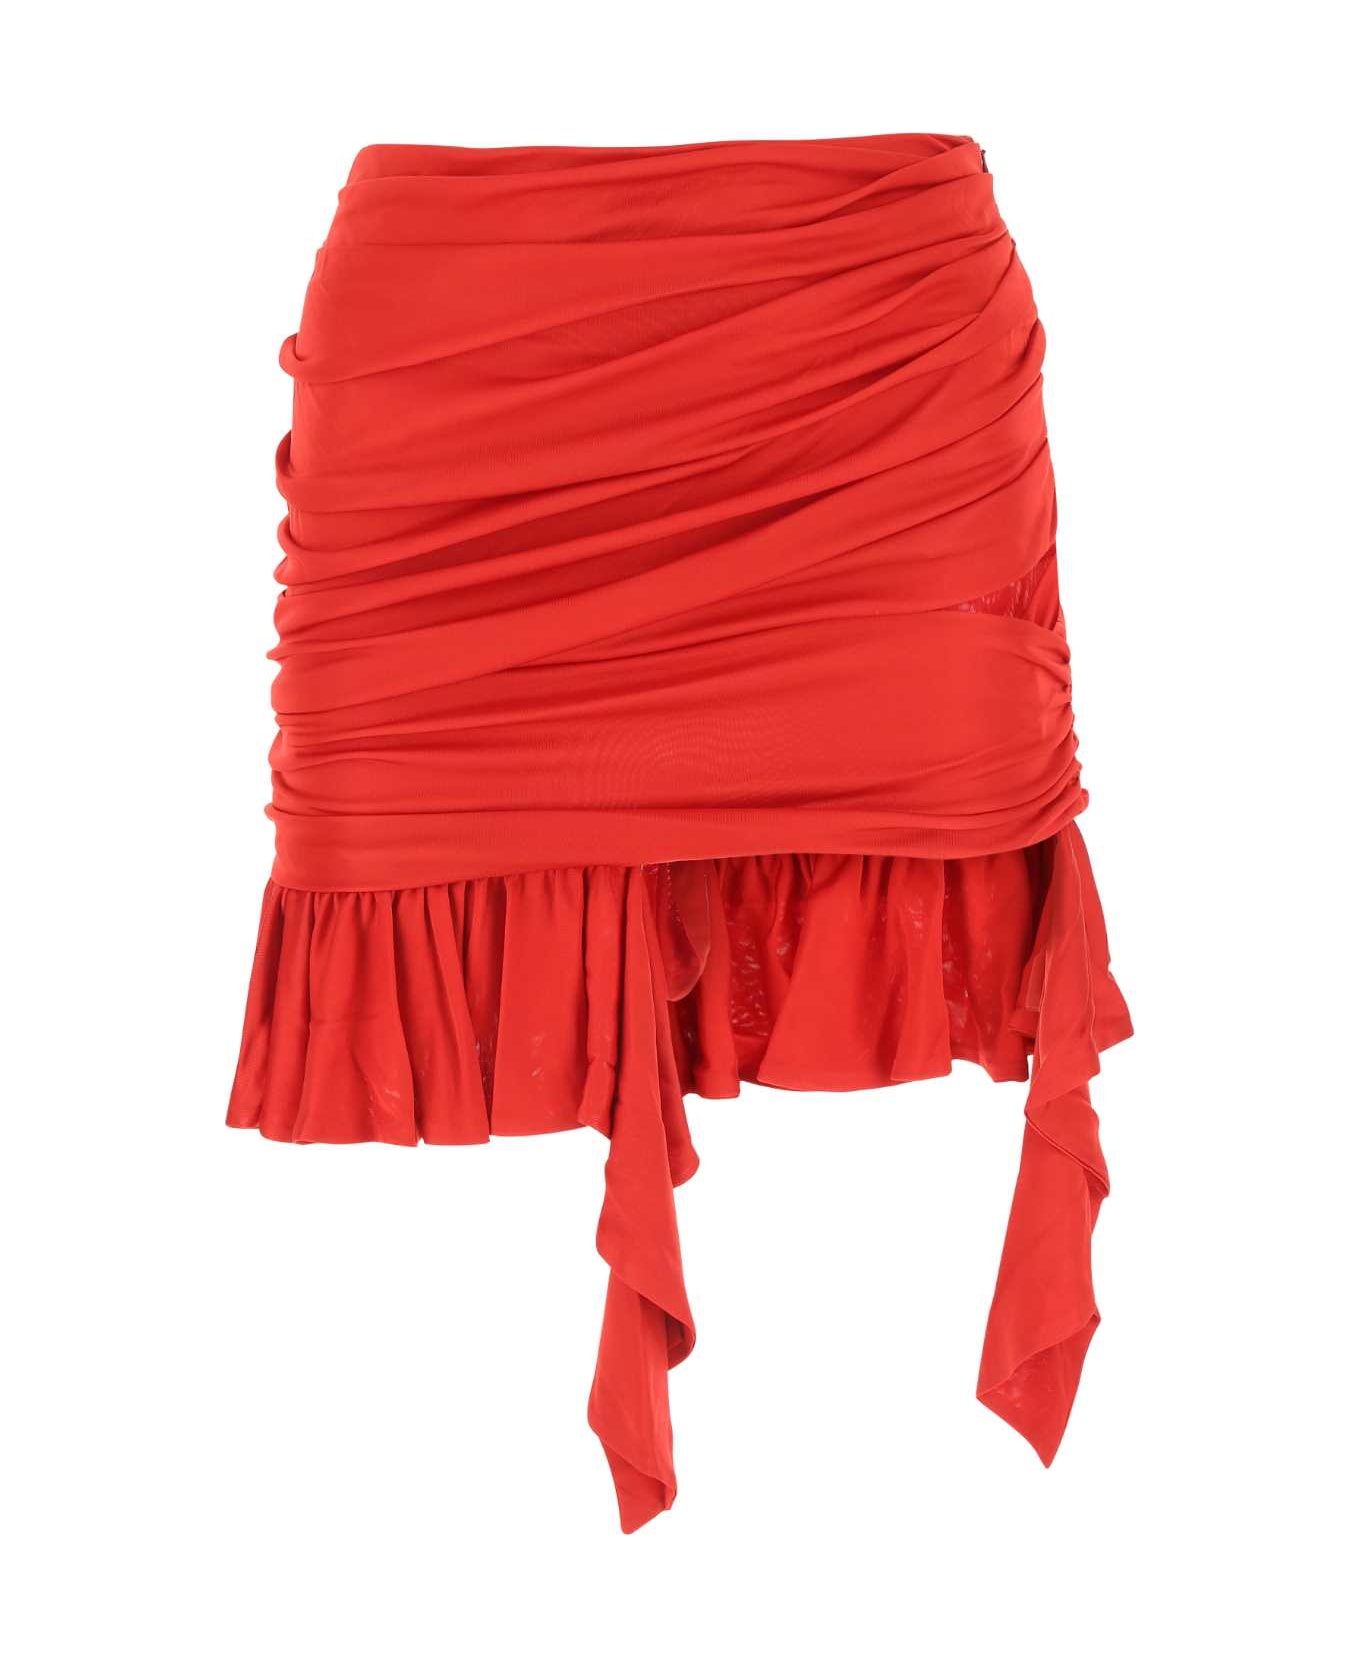 ANDREĀDAMO Red Viscose Mini Skirt - 1107